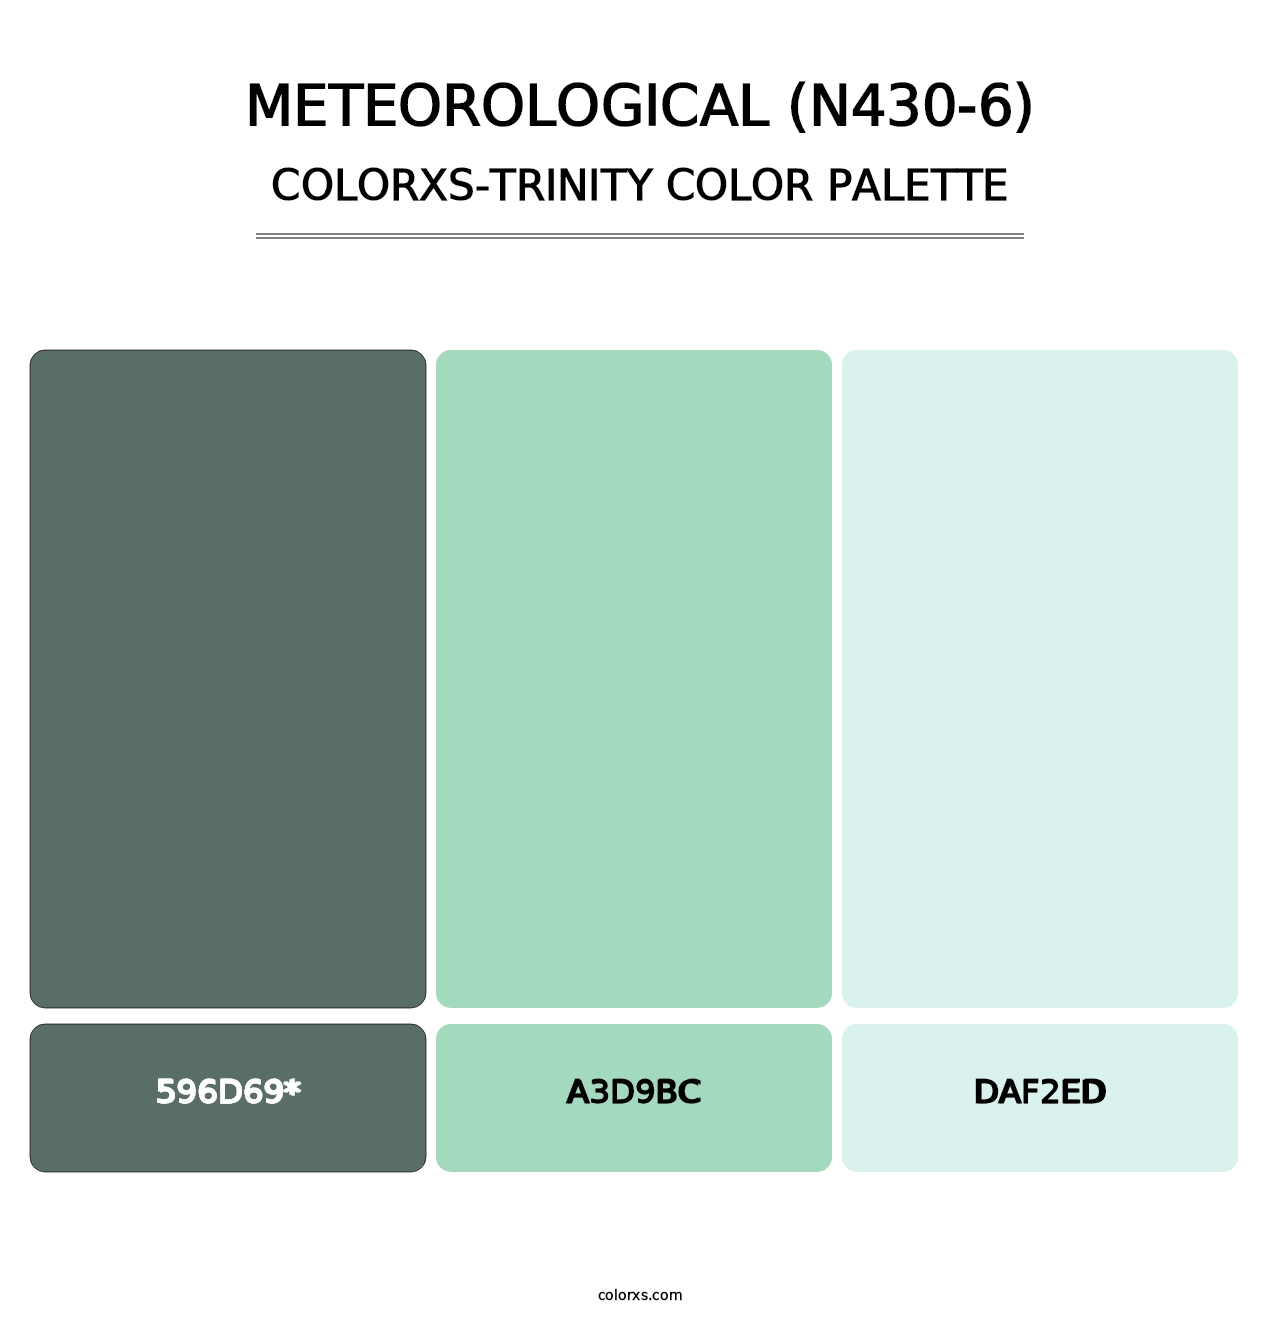 Meteorological (N430-6) - Colorxs Trinity Palette